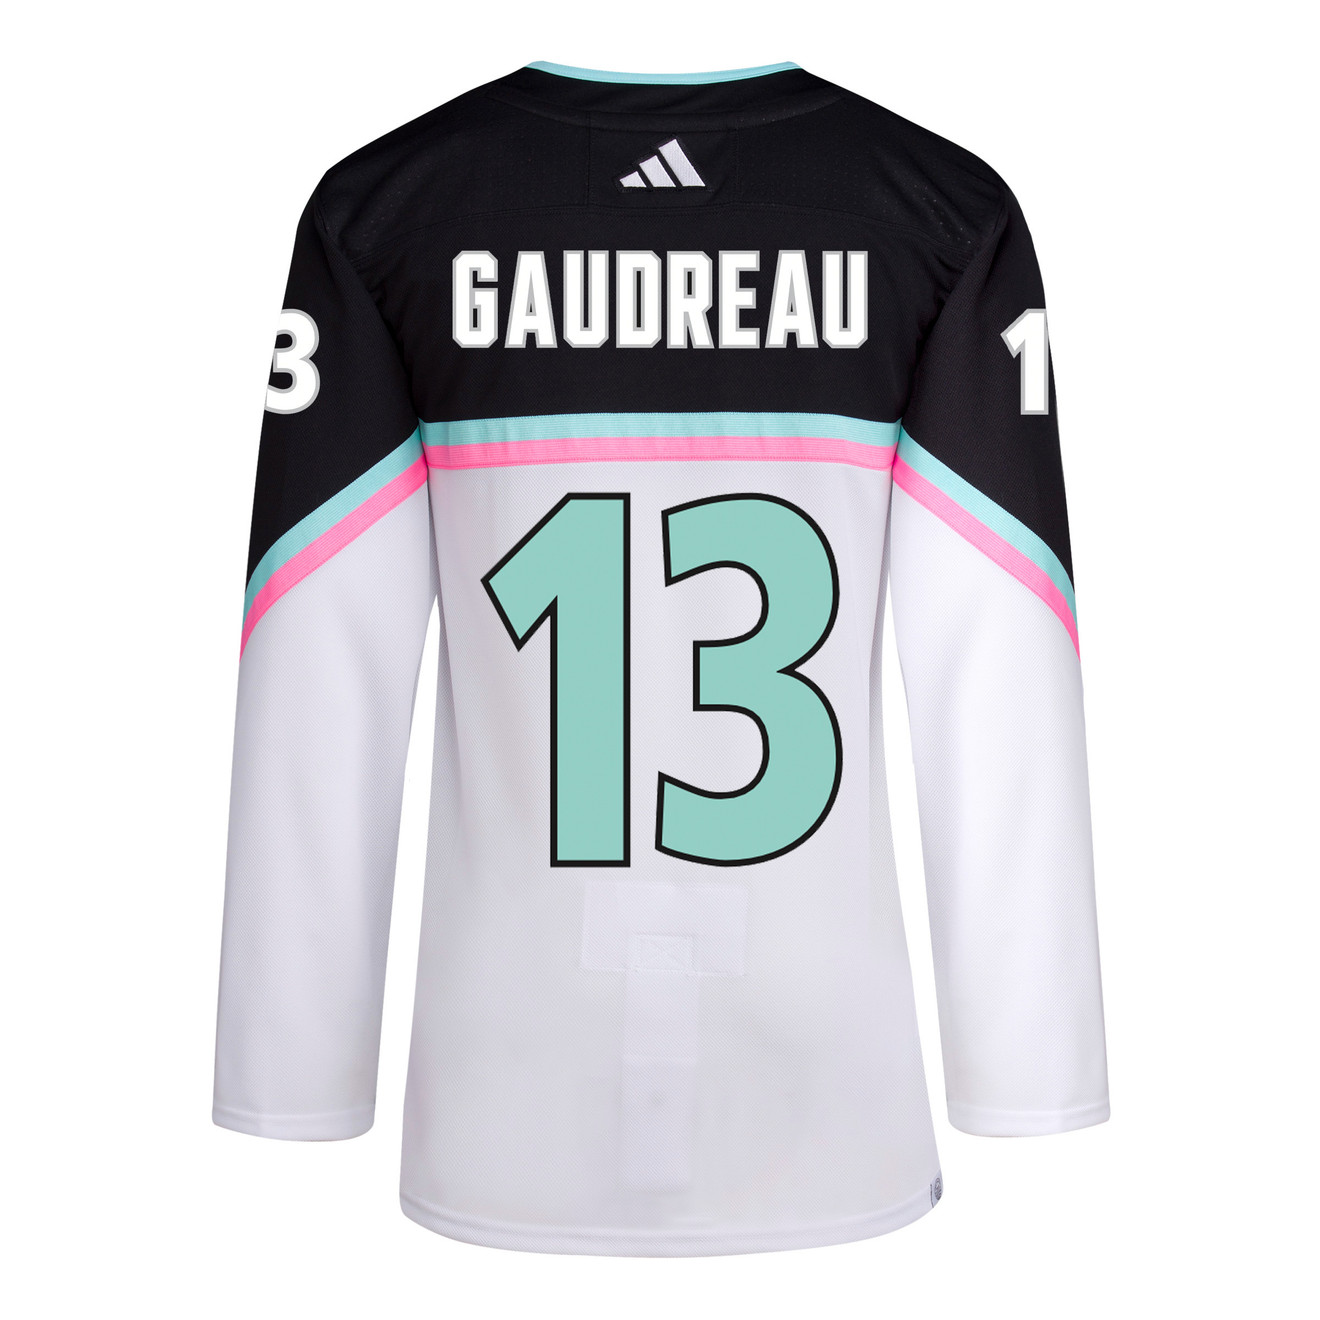 2023 GAUDREAU (13) All Star Jersey - Columbus Sportservice, LLC